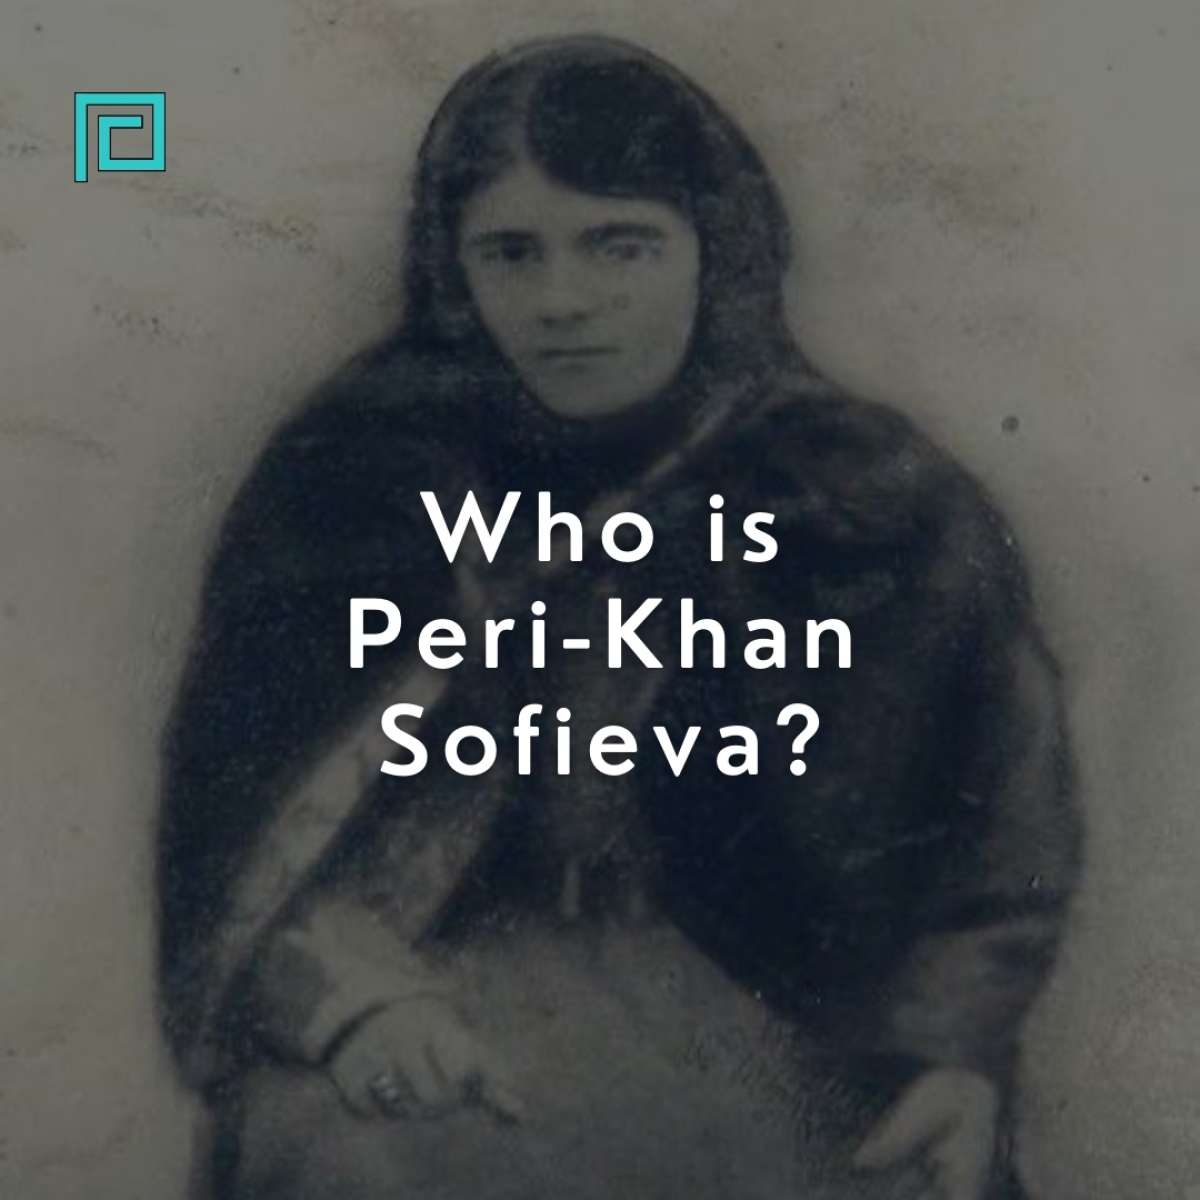 Who is Peri-Khan Sofieva?